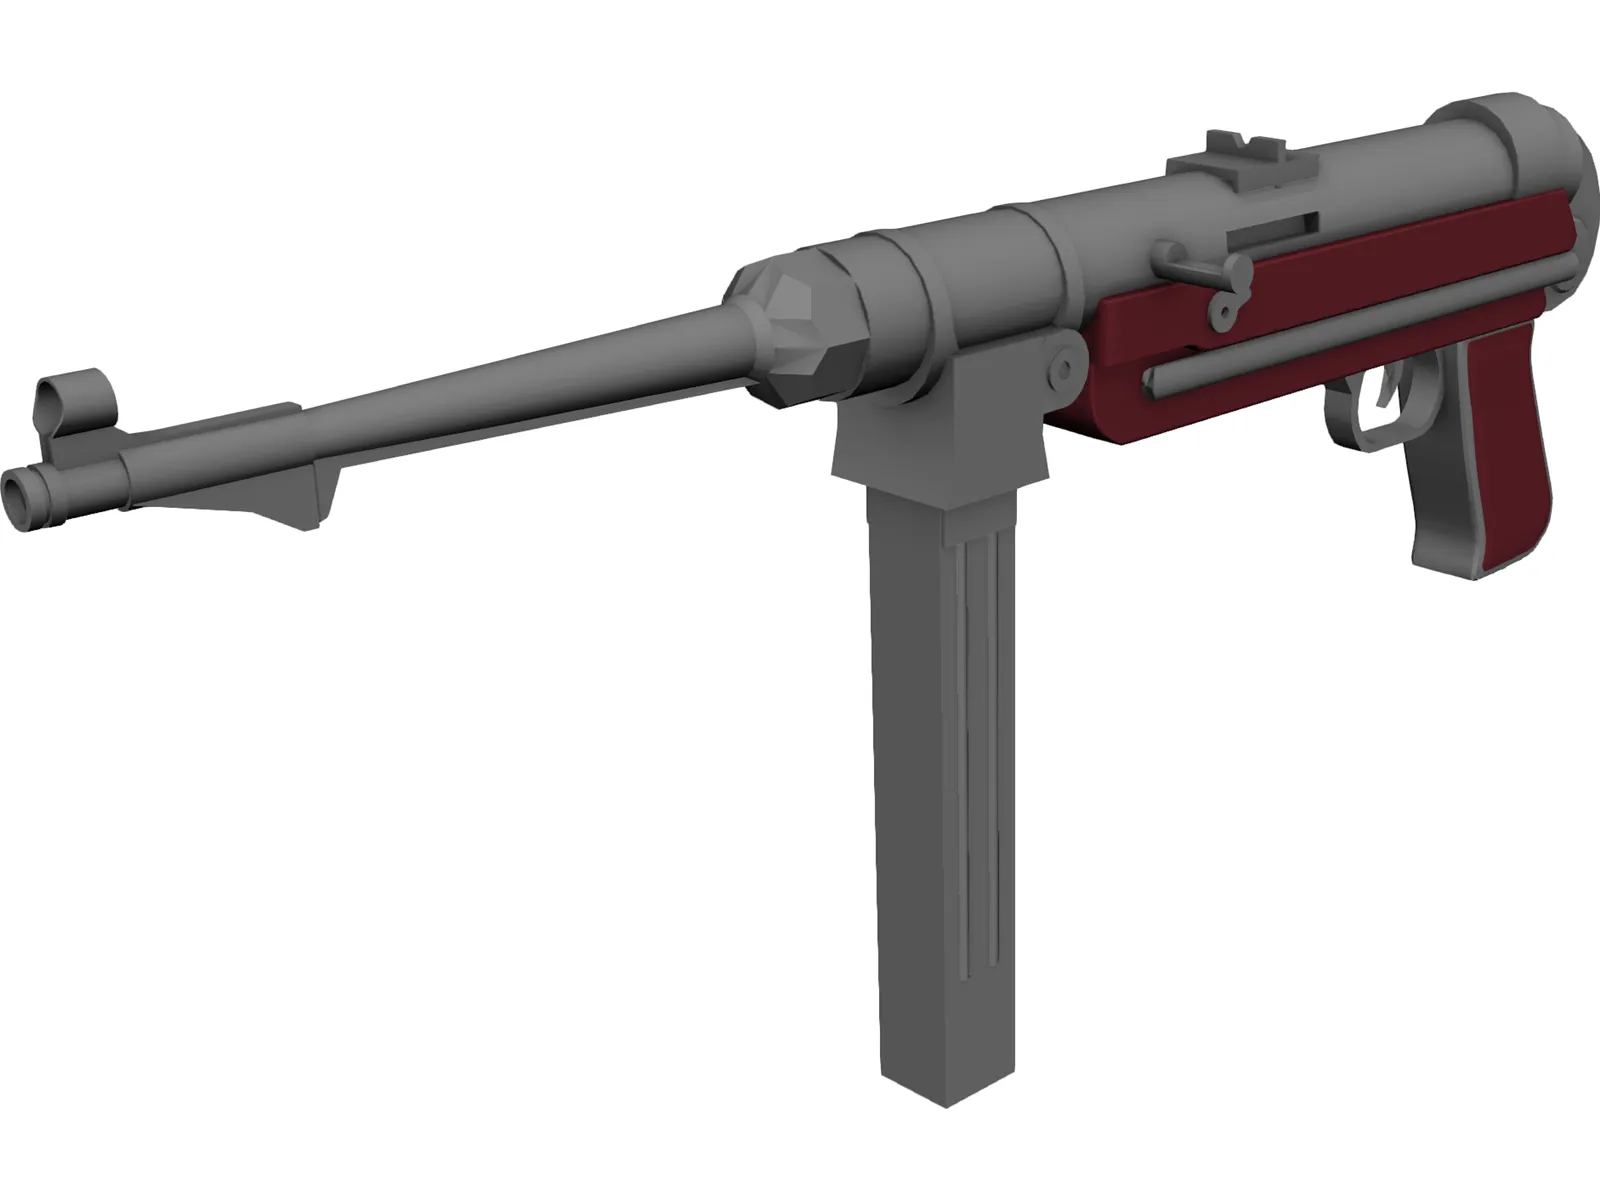 MP 40 Submachine Gun 3D Model